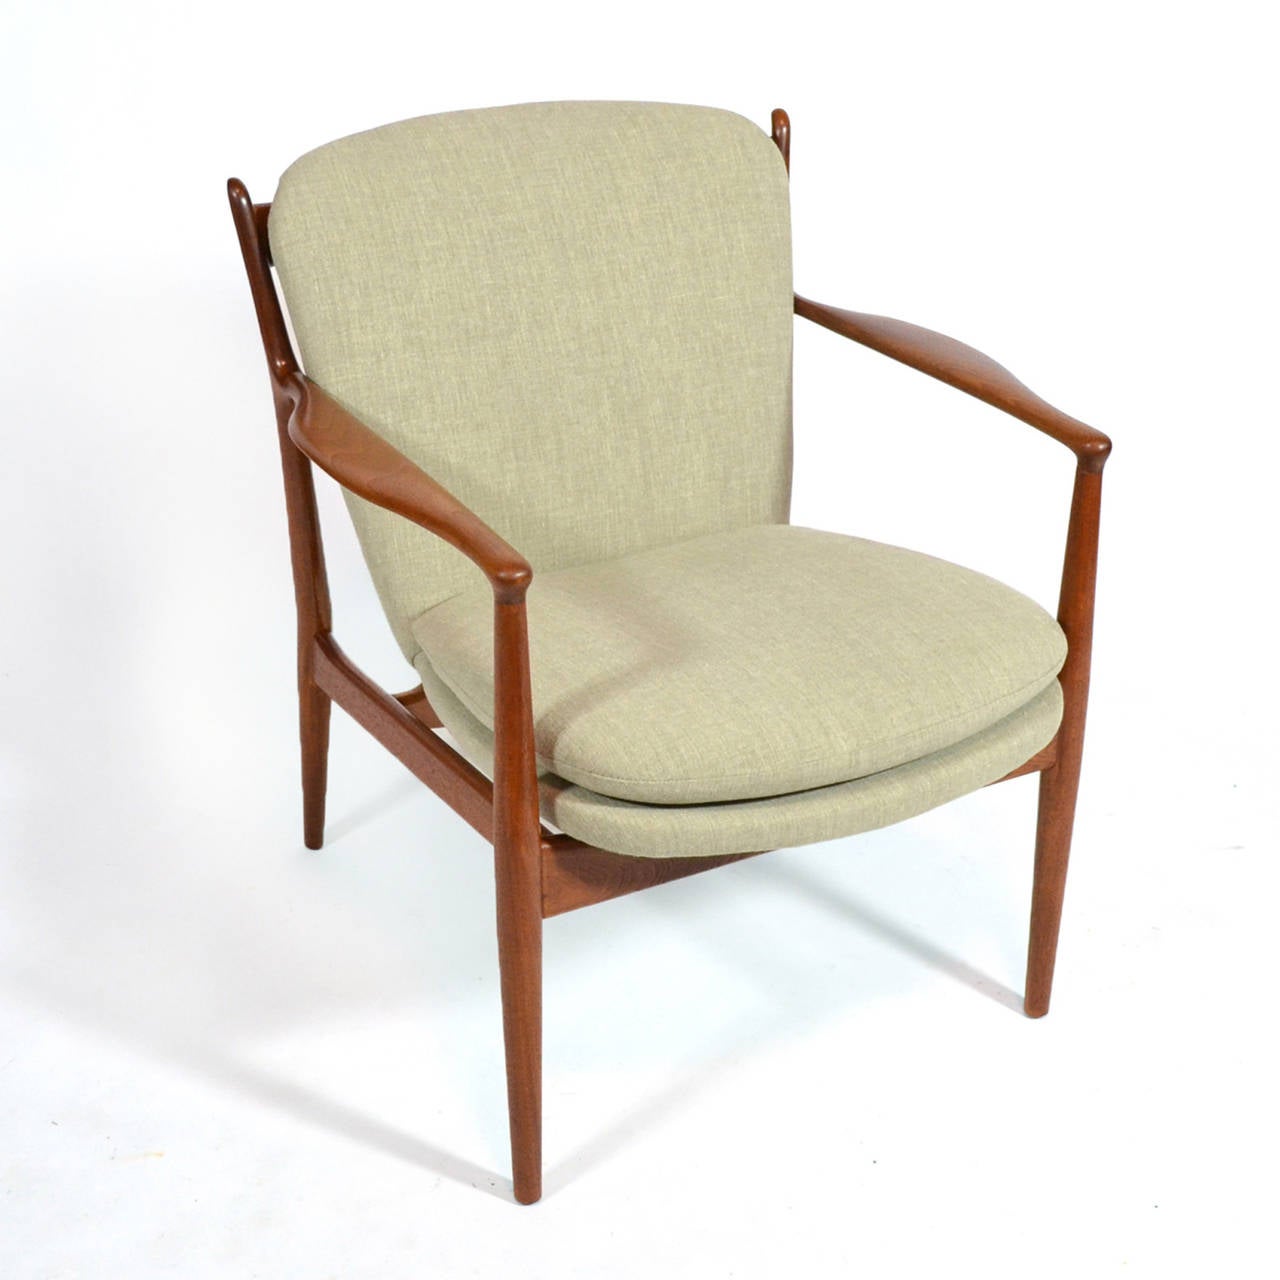 Mid-20th Century Finn Juhl Delegate's Chair For Sale